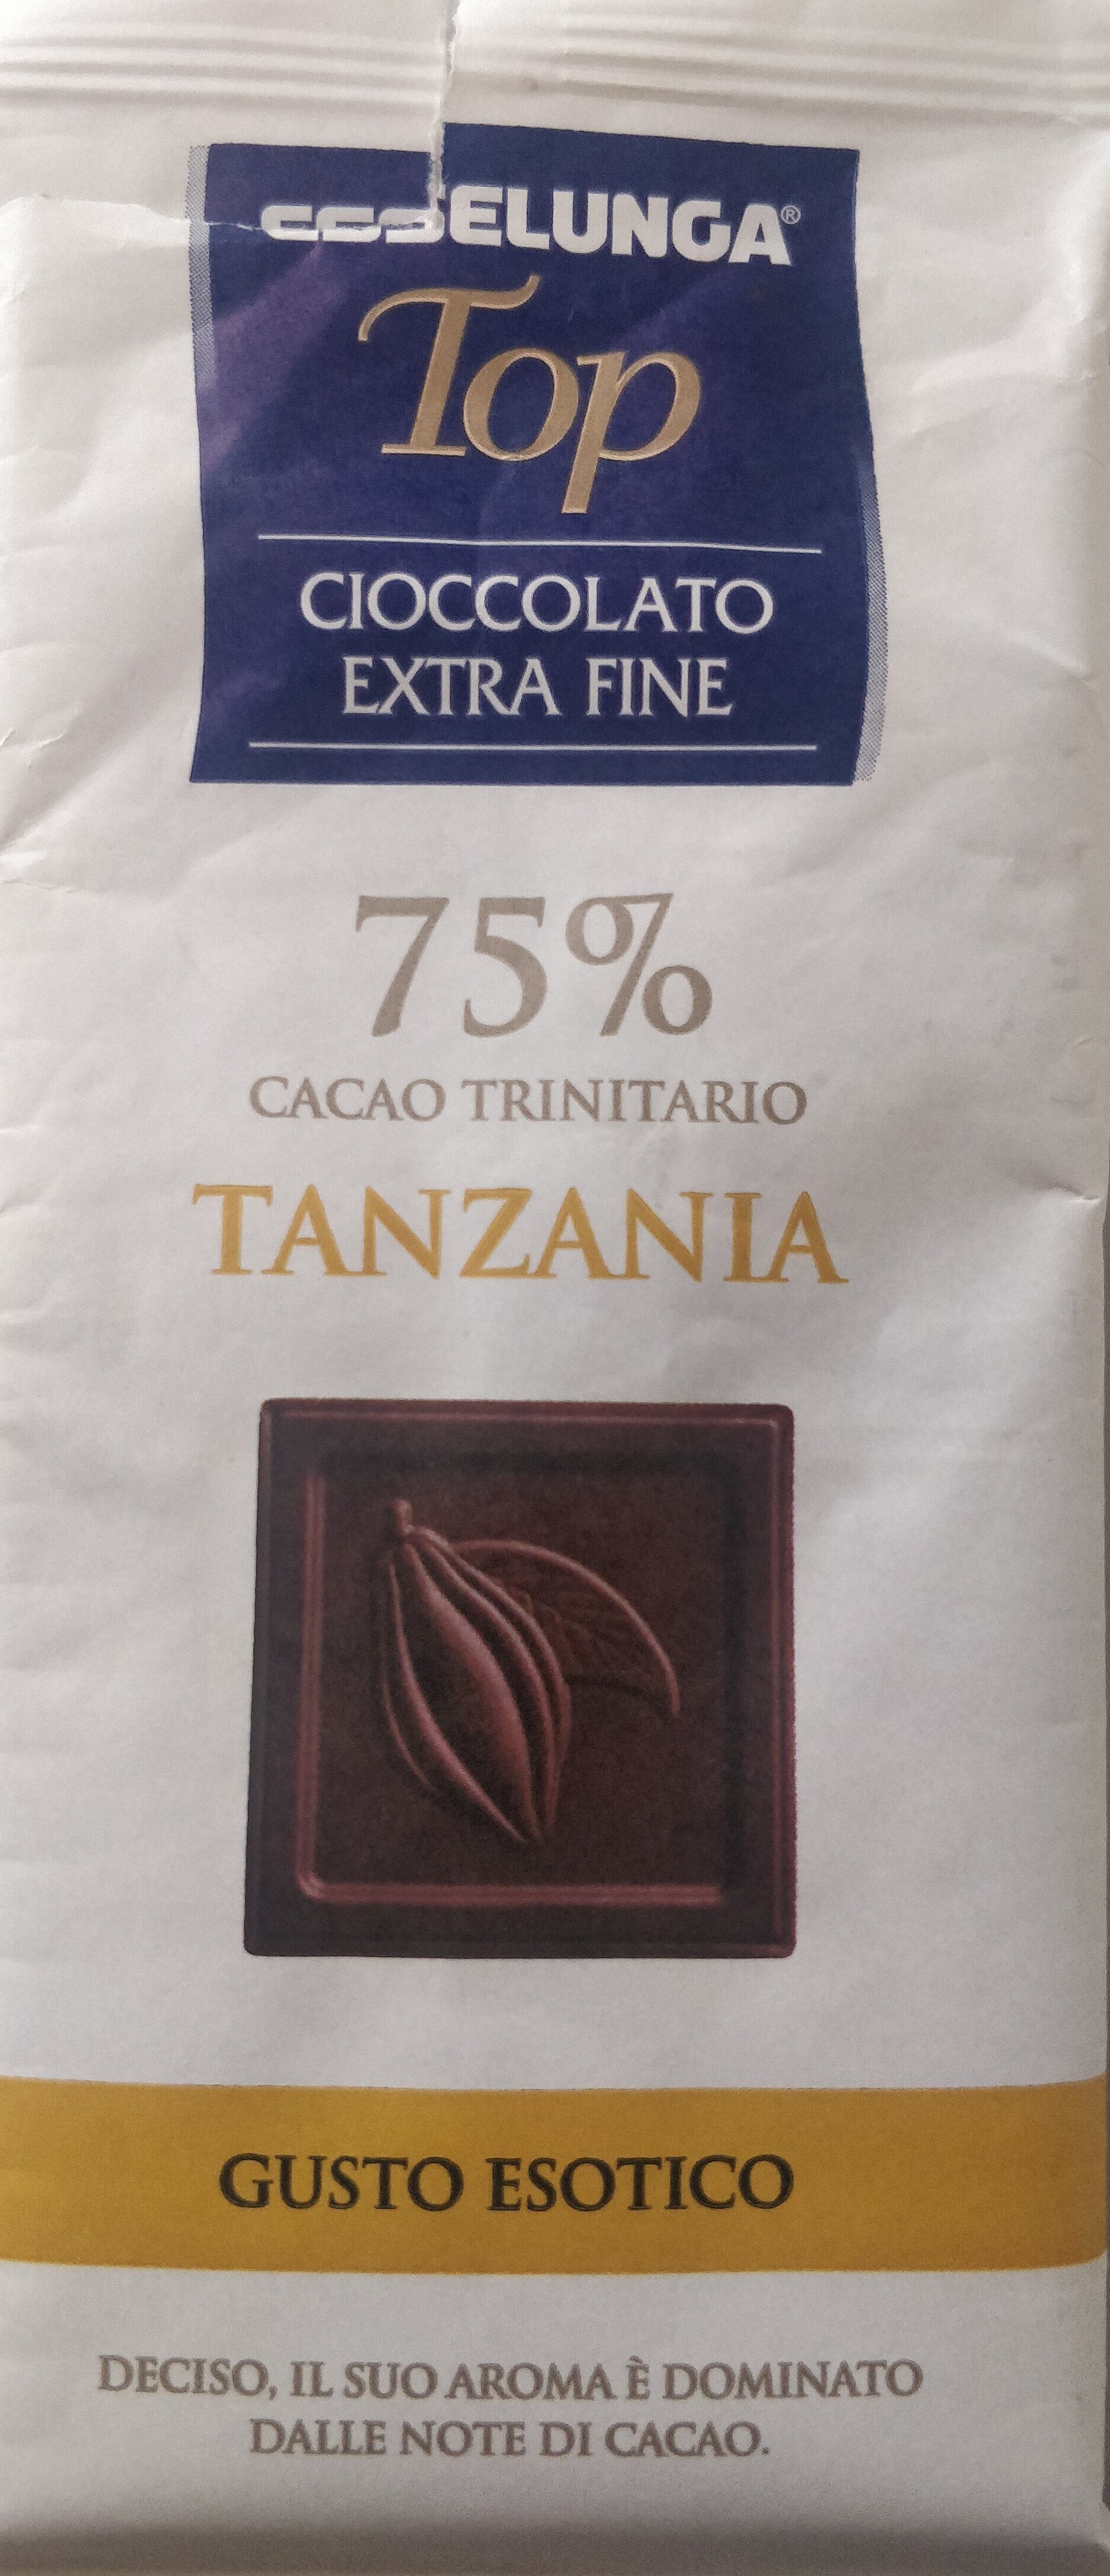 Cioccolato extra fine - 75% cacao Trinitario Tanzania - Product - it